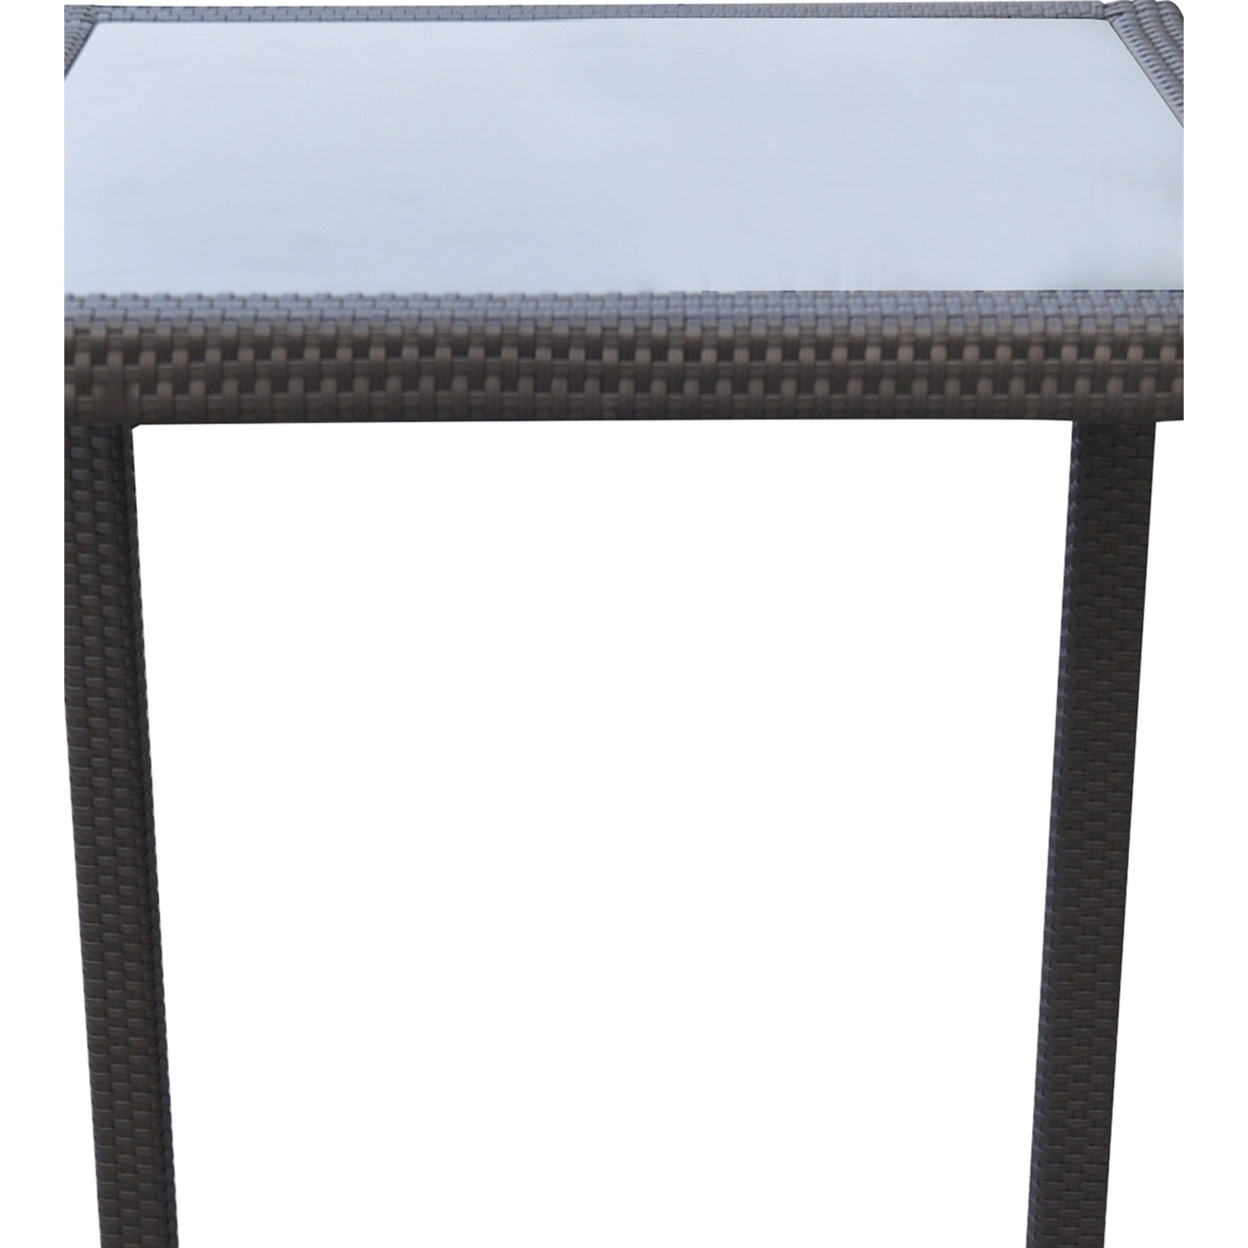 32 Inches Glass Top Wicker Woven Aluminum Bar Table, Black- Saltoro Sherpi